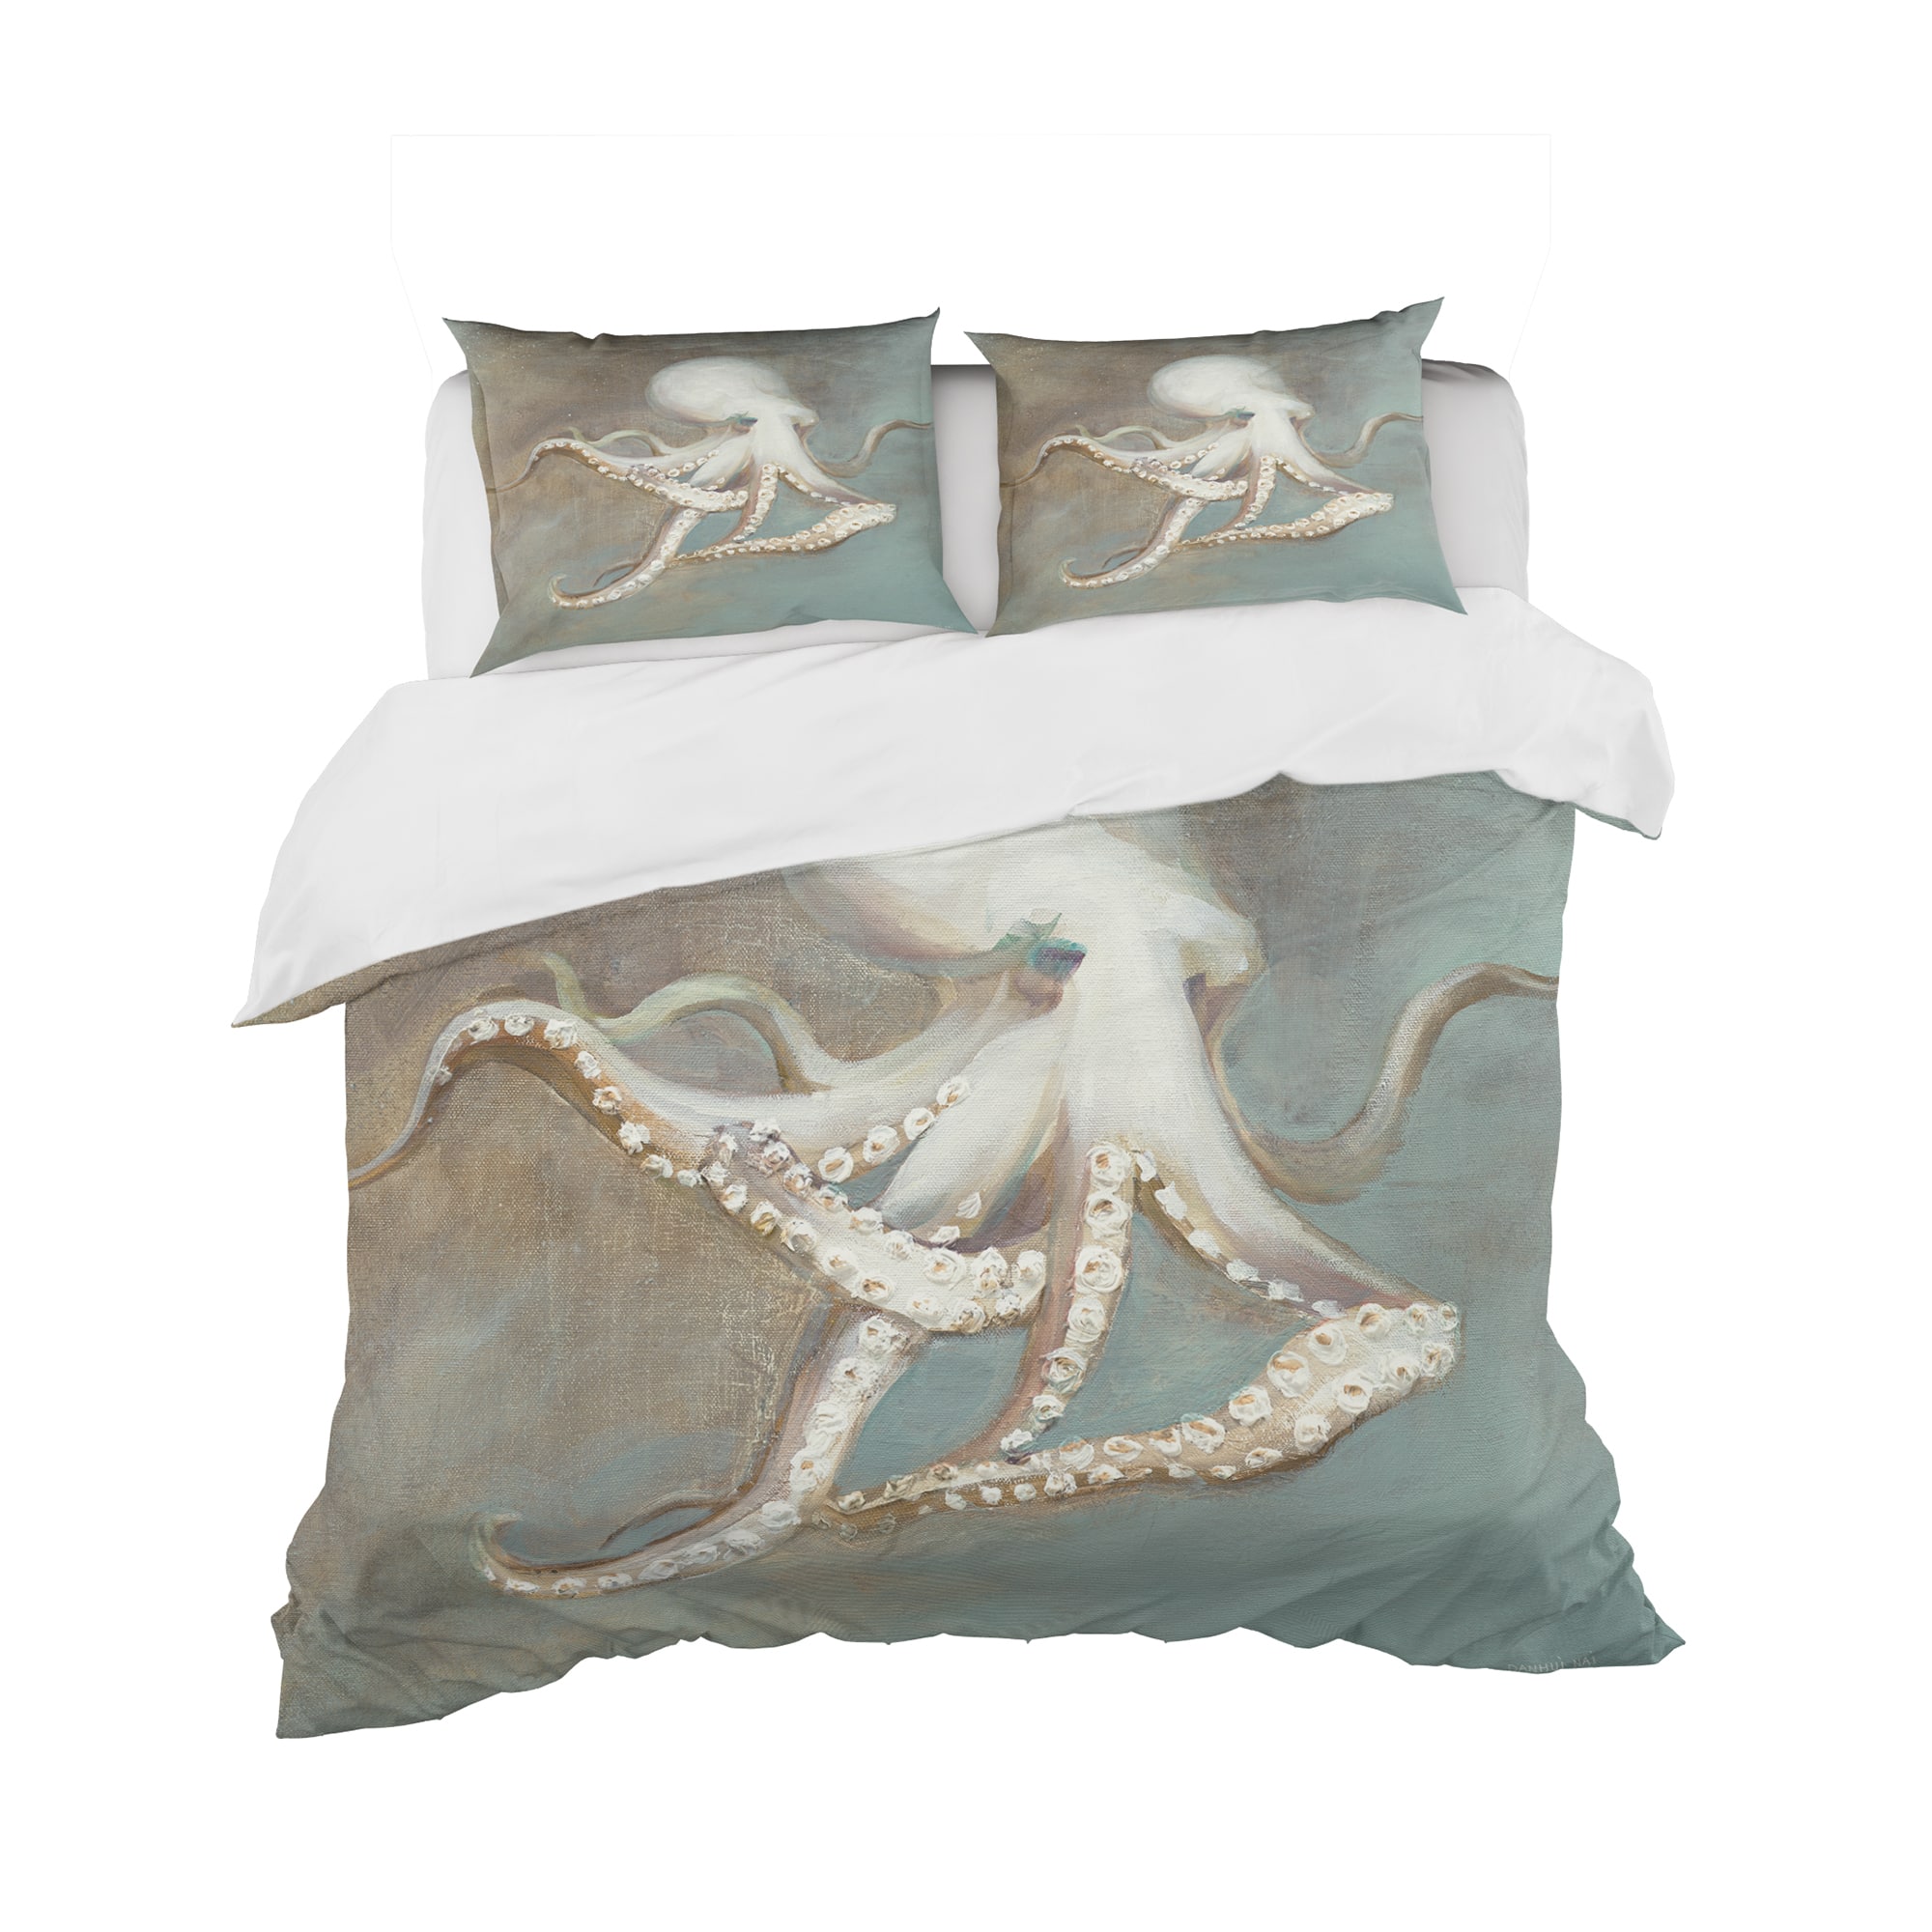 Designart &#x27;Octopus Treasures from the Sea&#x27; Coastal Bedding Set - Duvet Cover &#x26; Shams